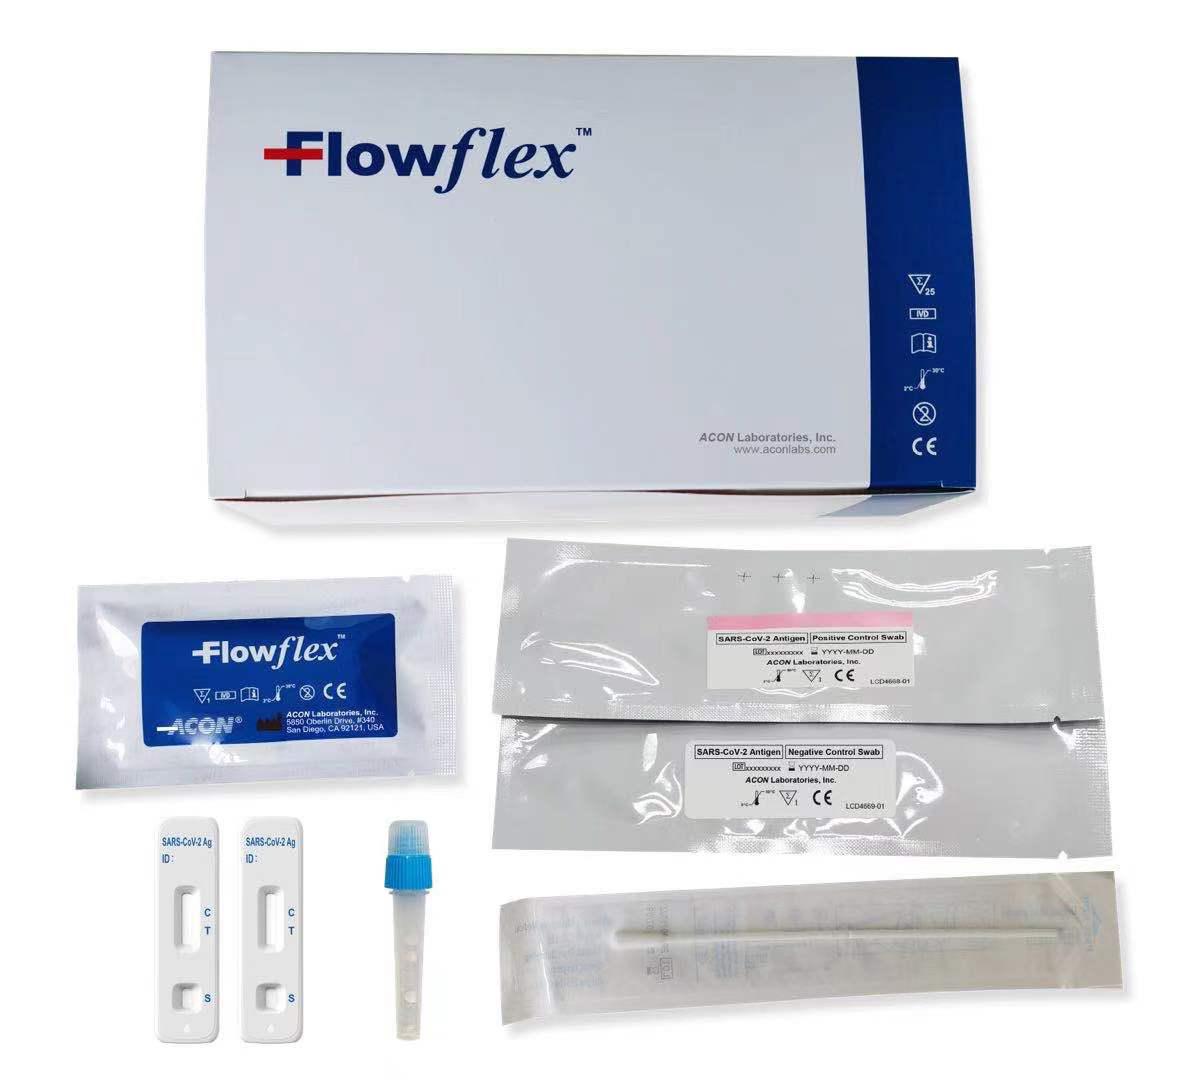 Flowflex Antigen 25er Profi Test